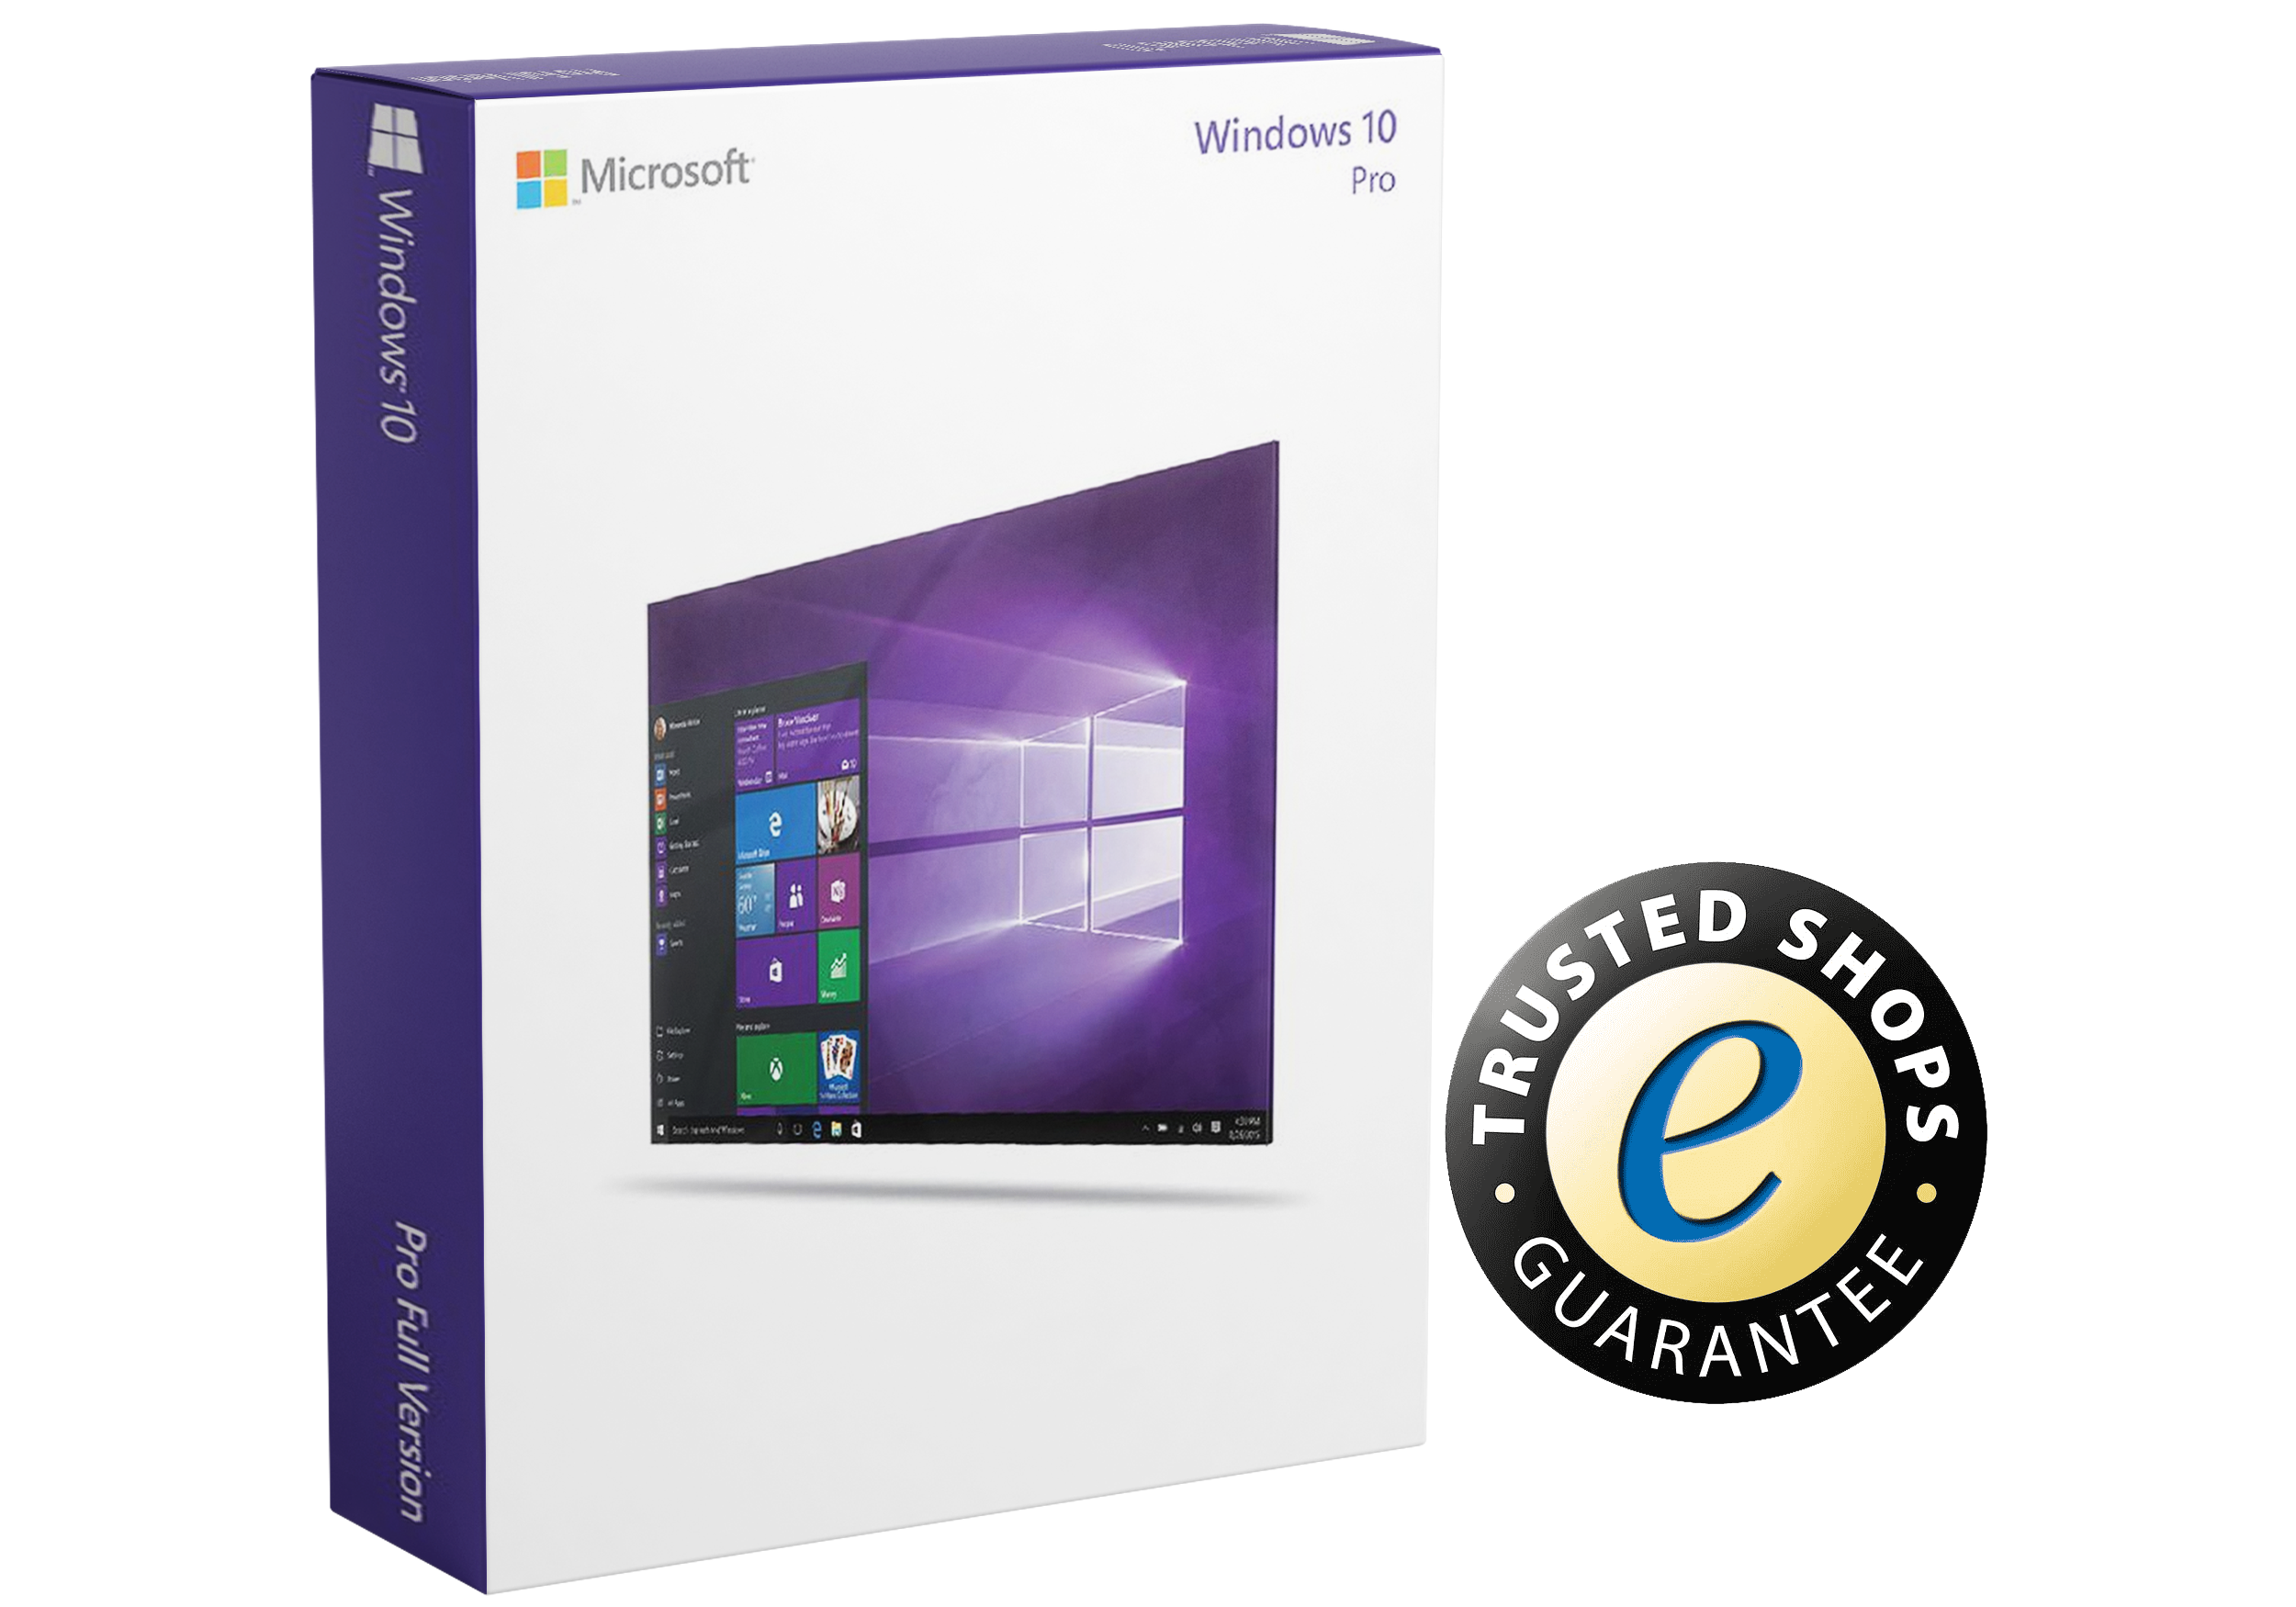 Windows 10 Professional Pro